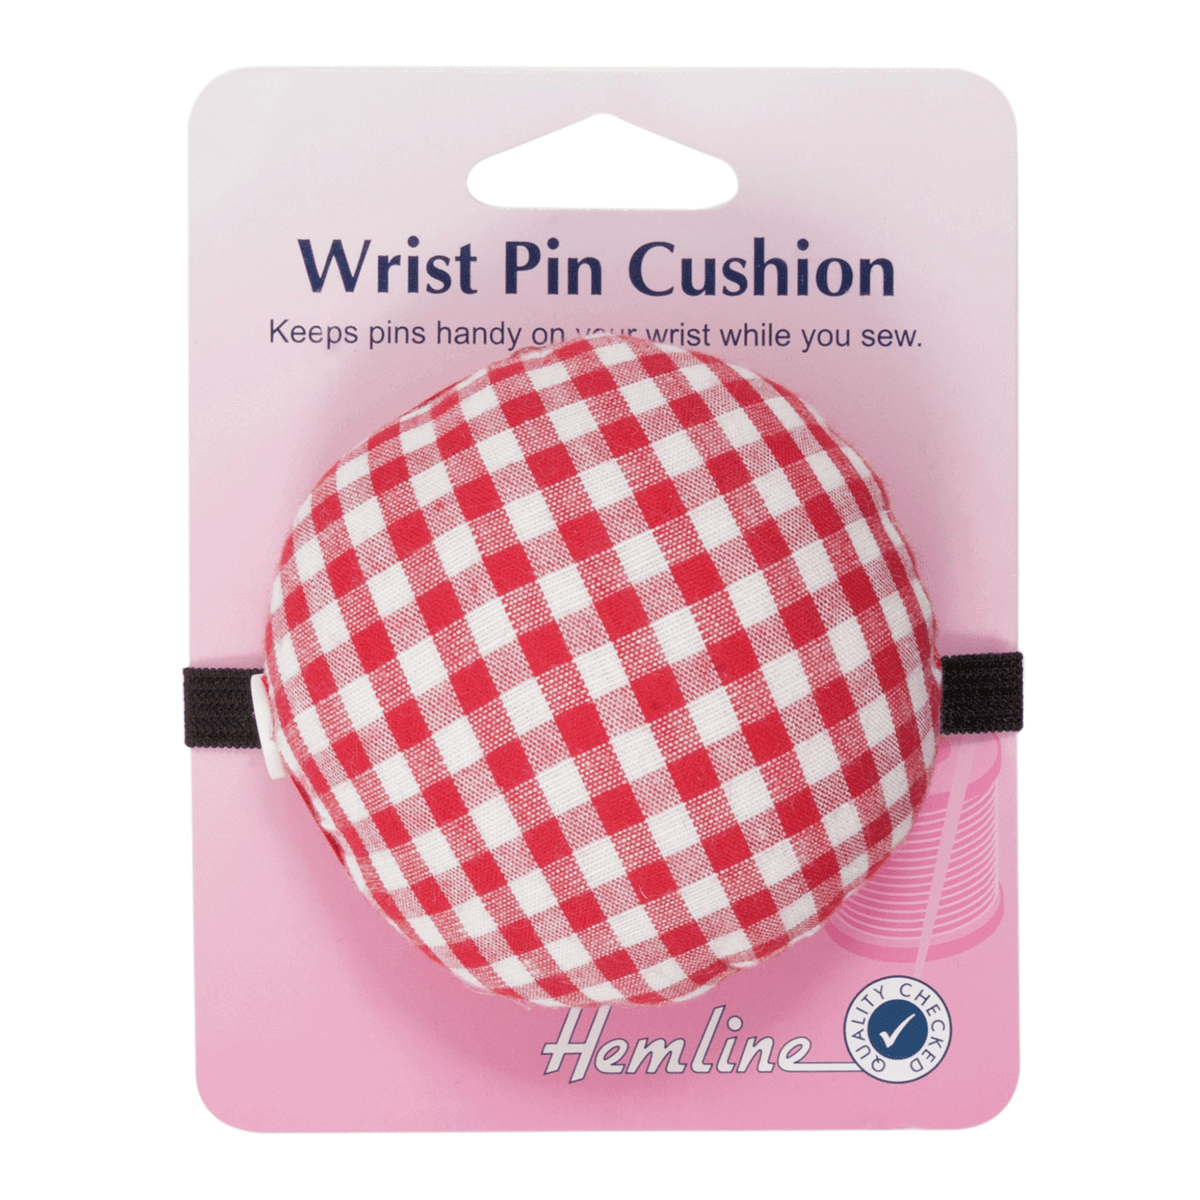 Hemline Sewing Pin Cushion for Wrist